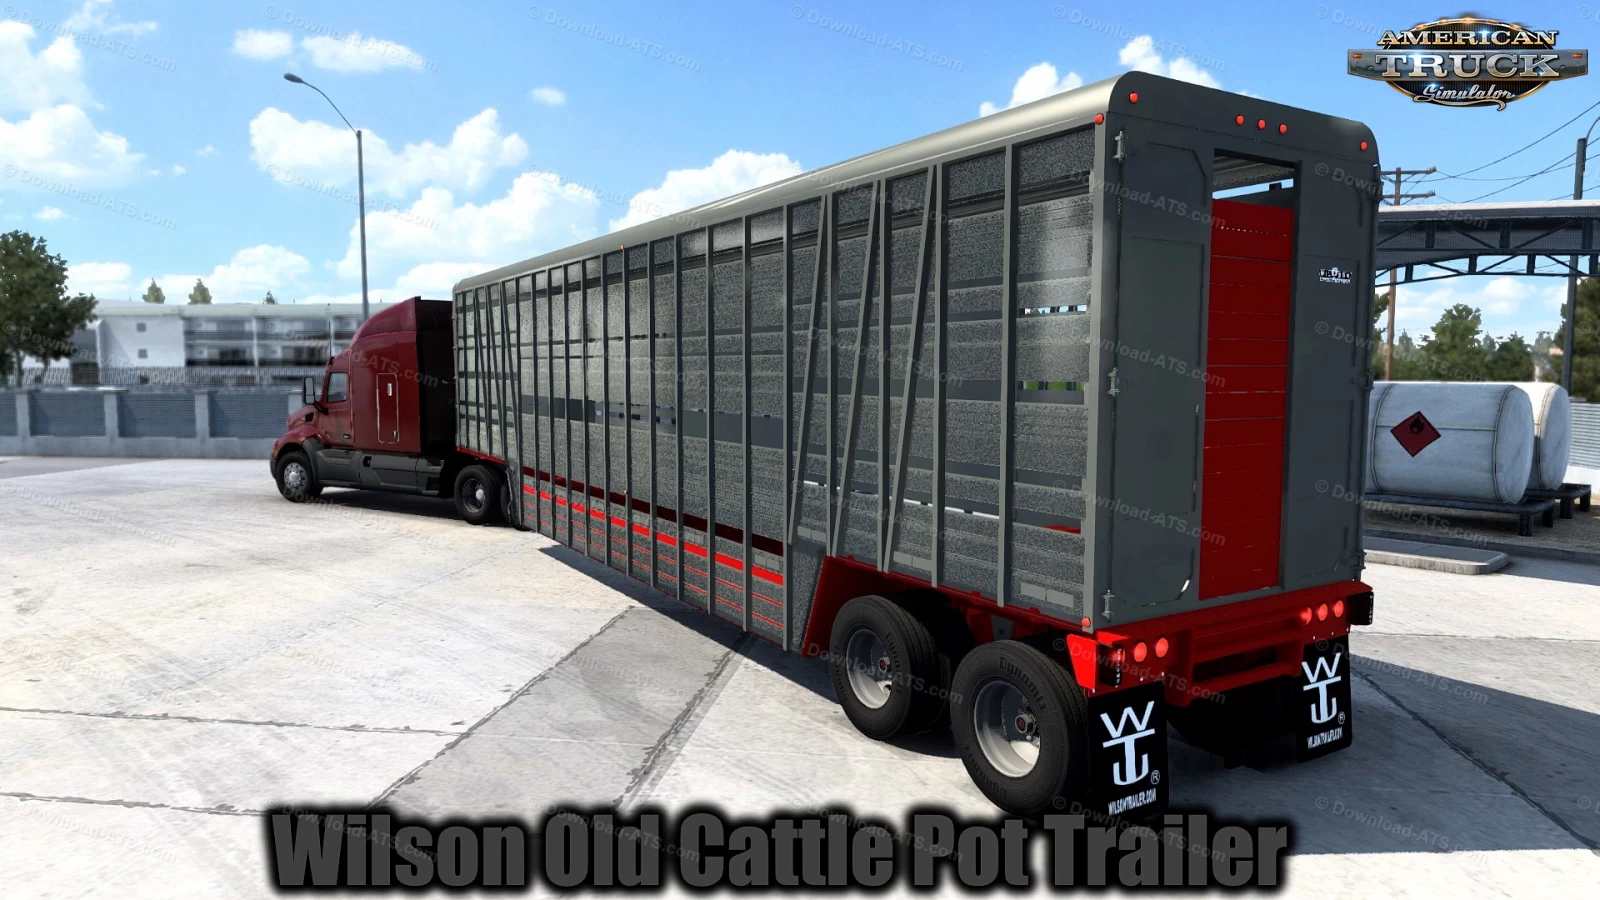 Wilson Old Cattle Pot Trailer v1.2 (1.41.x) for ATS